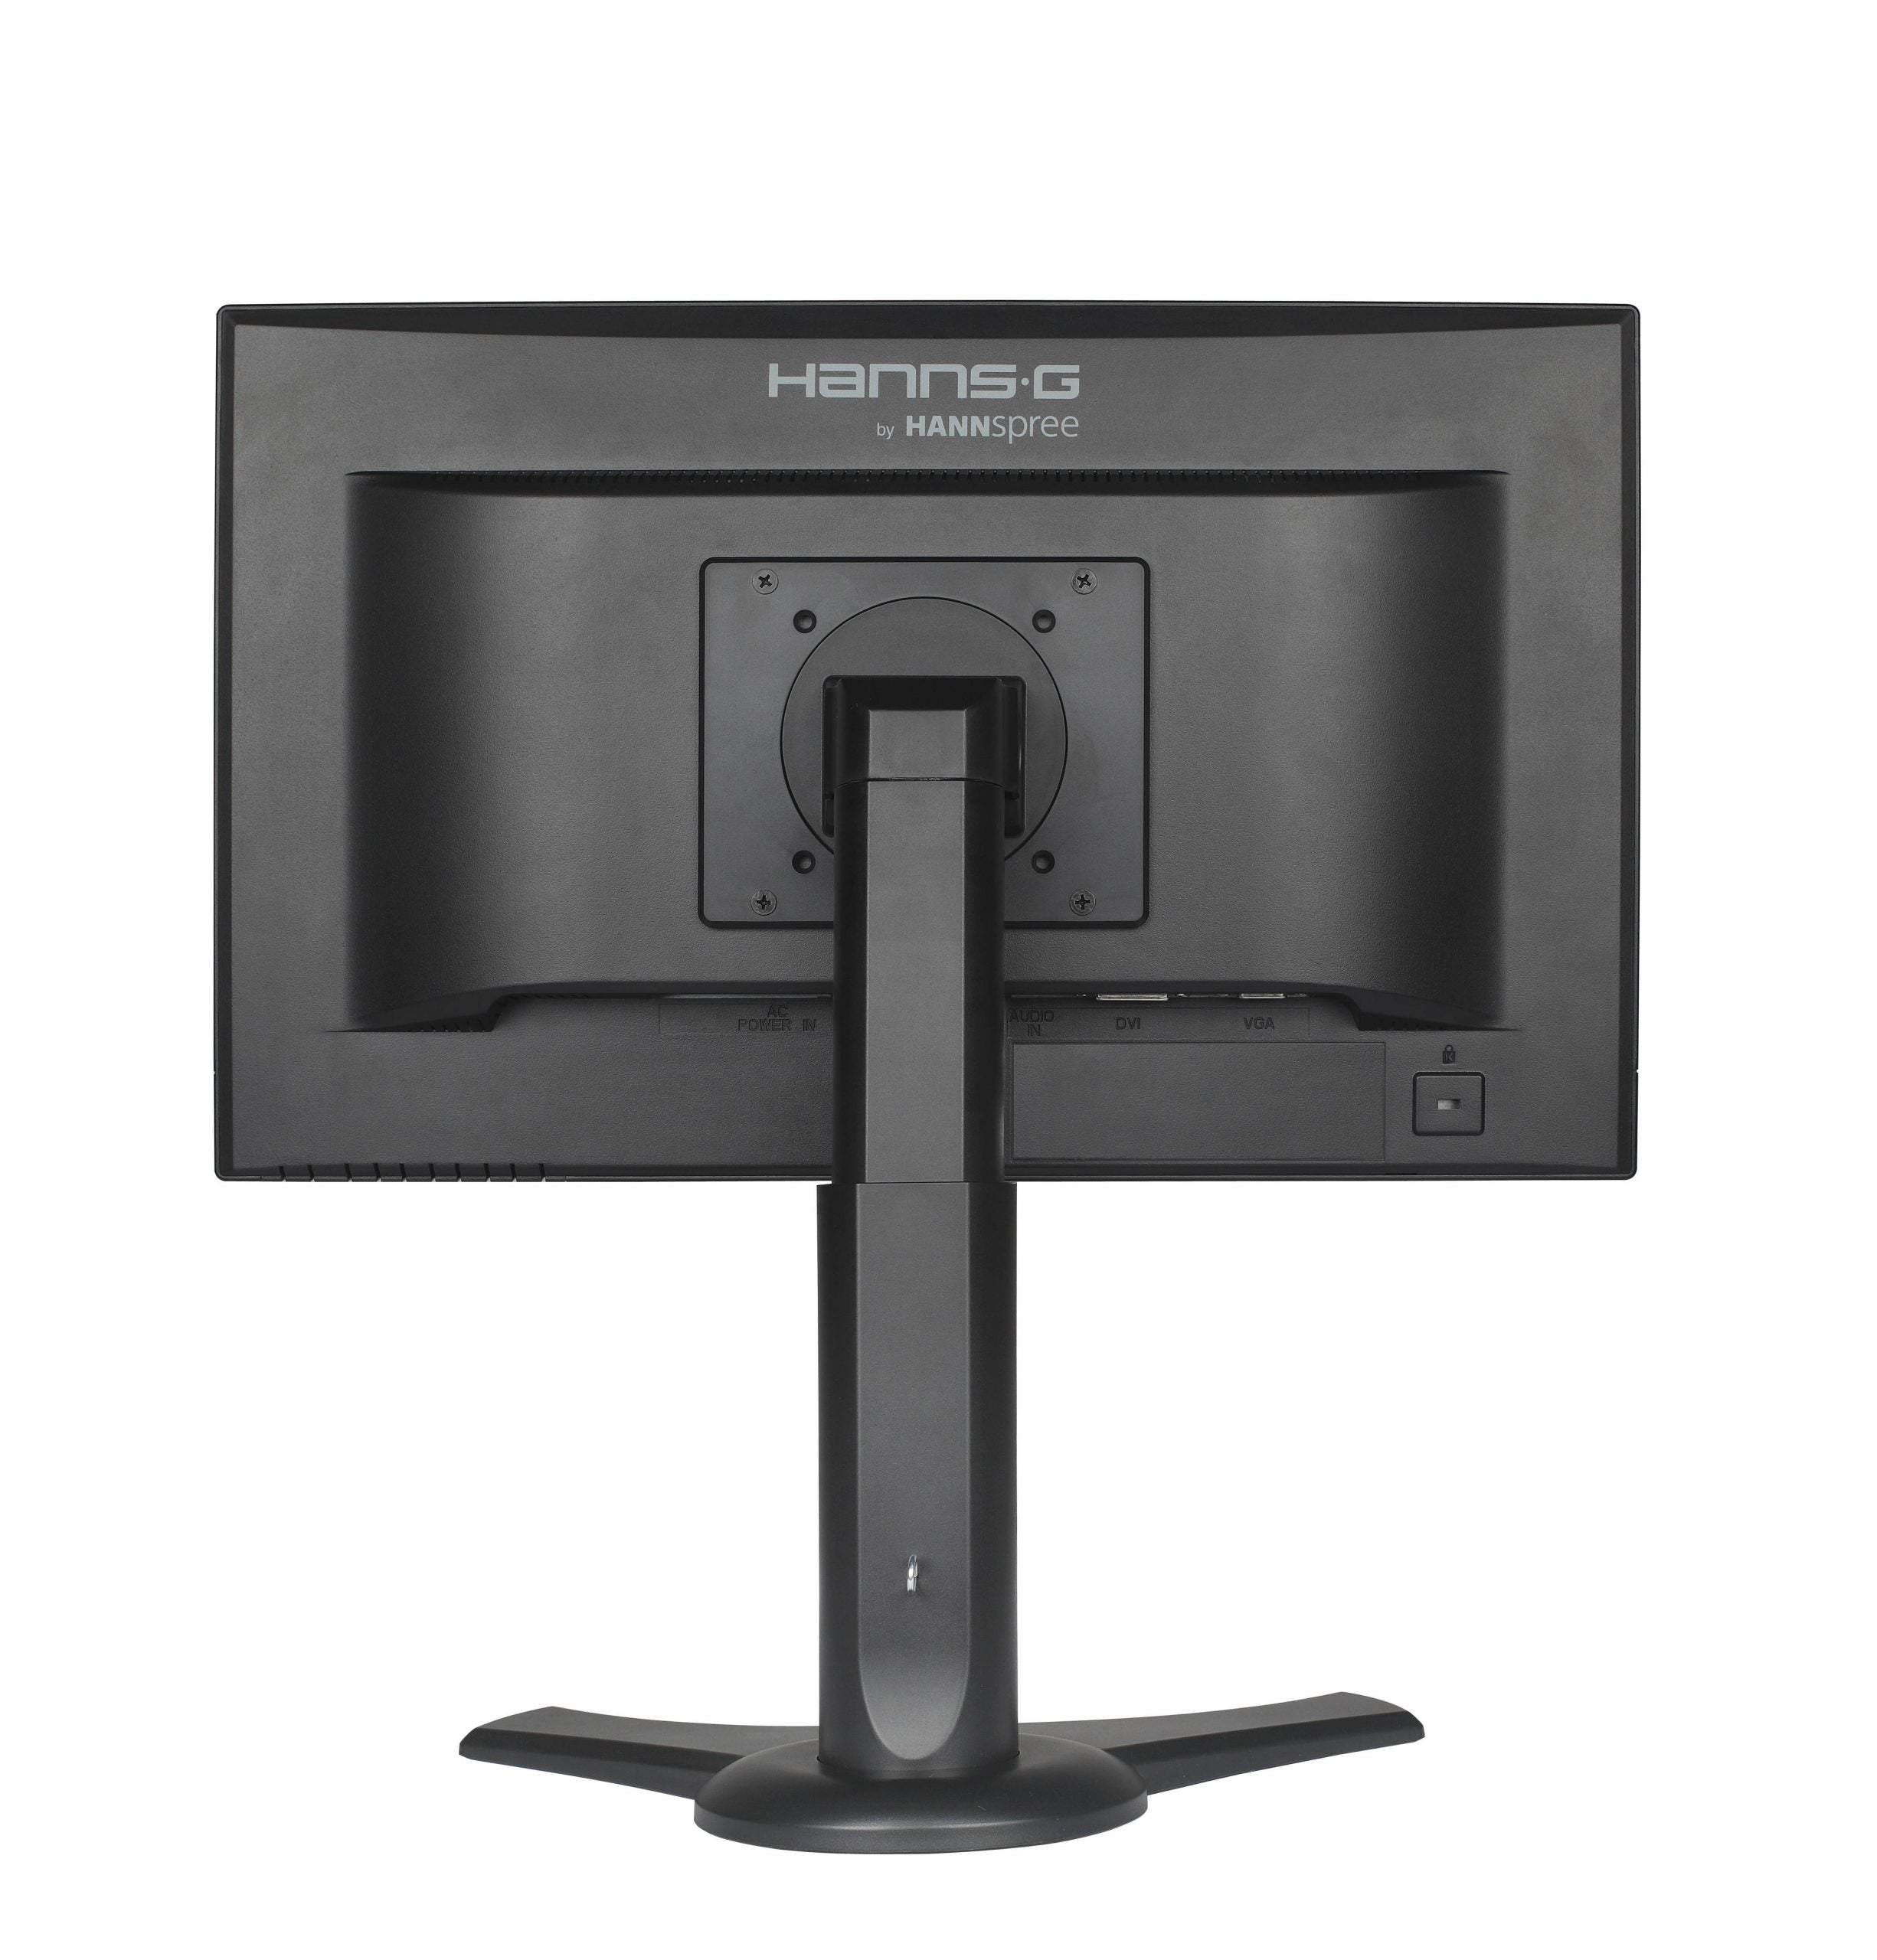 Hannspree Hanns.G HP 205 Monitor LCD TFT LED 20